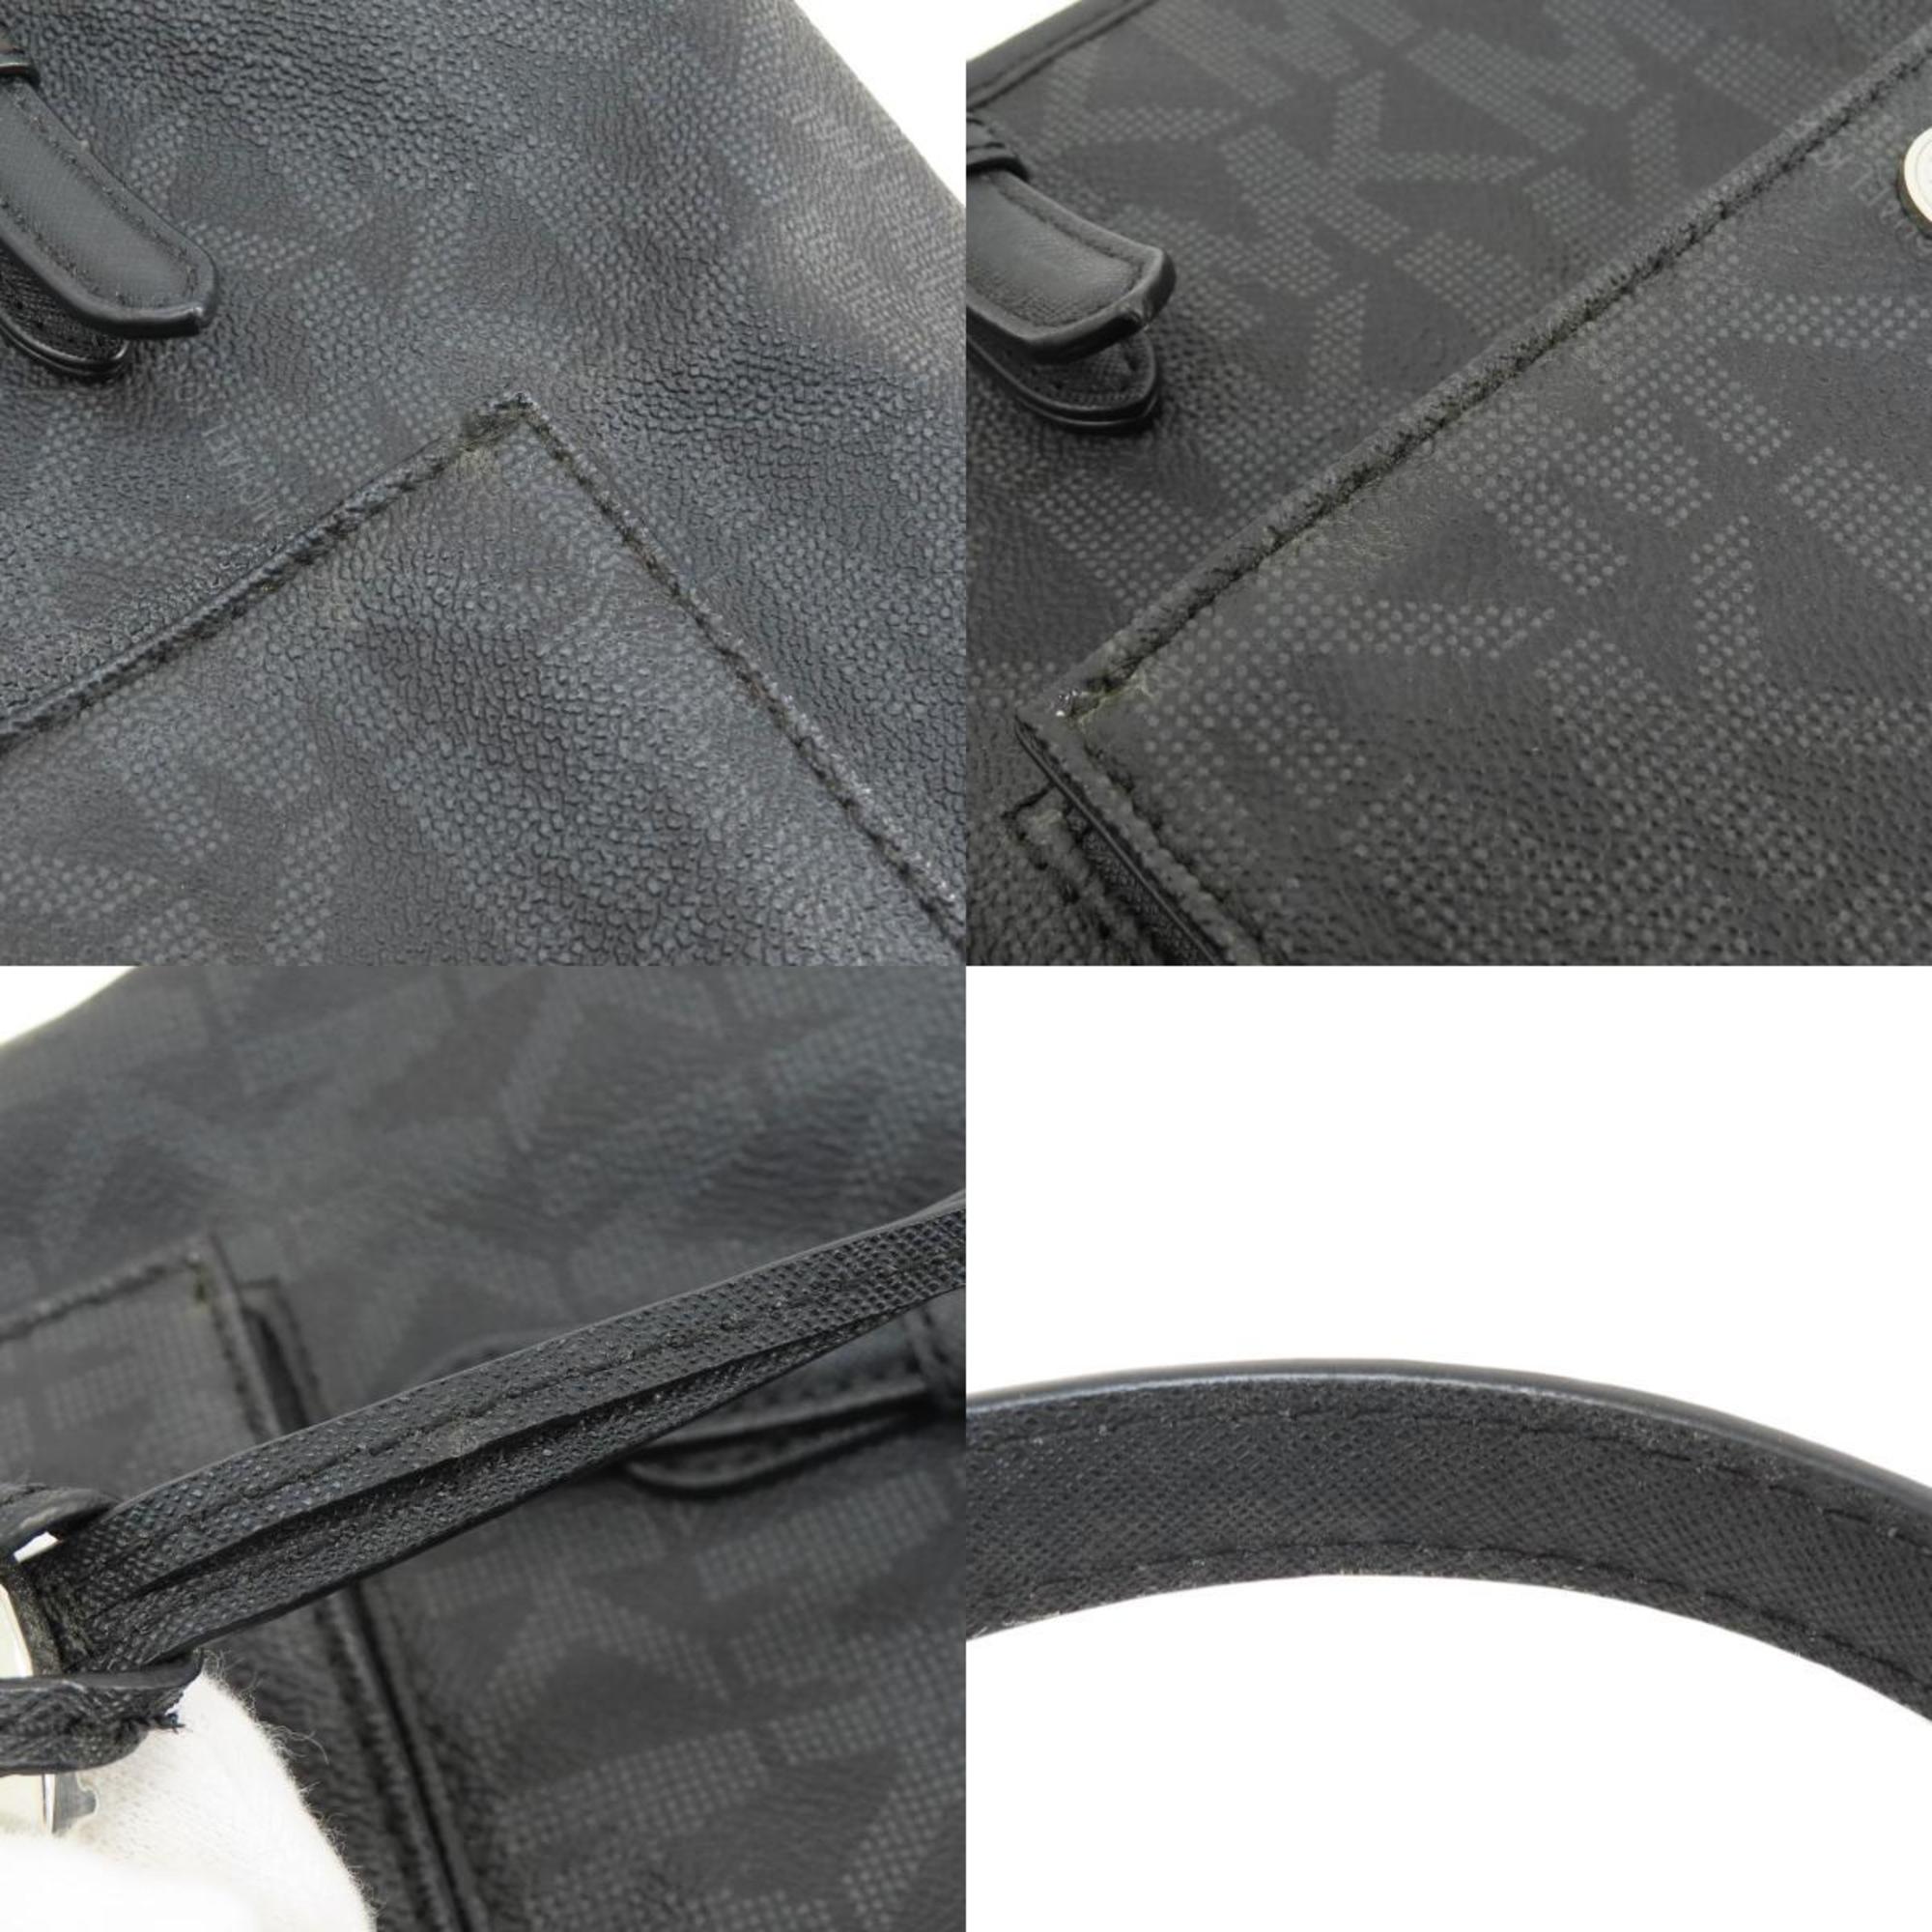 Michael Kors MK Signature Handbag Leather Coated Canvas Women's